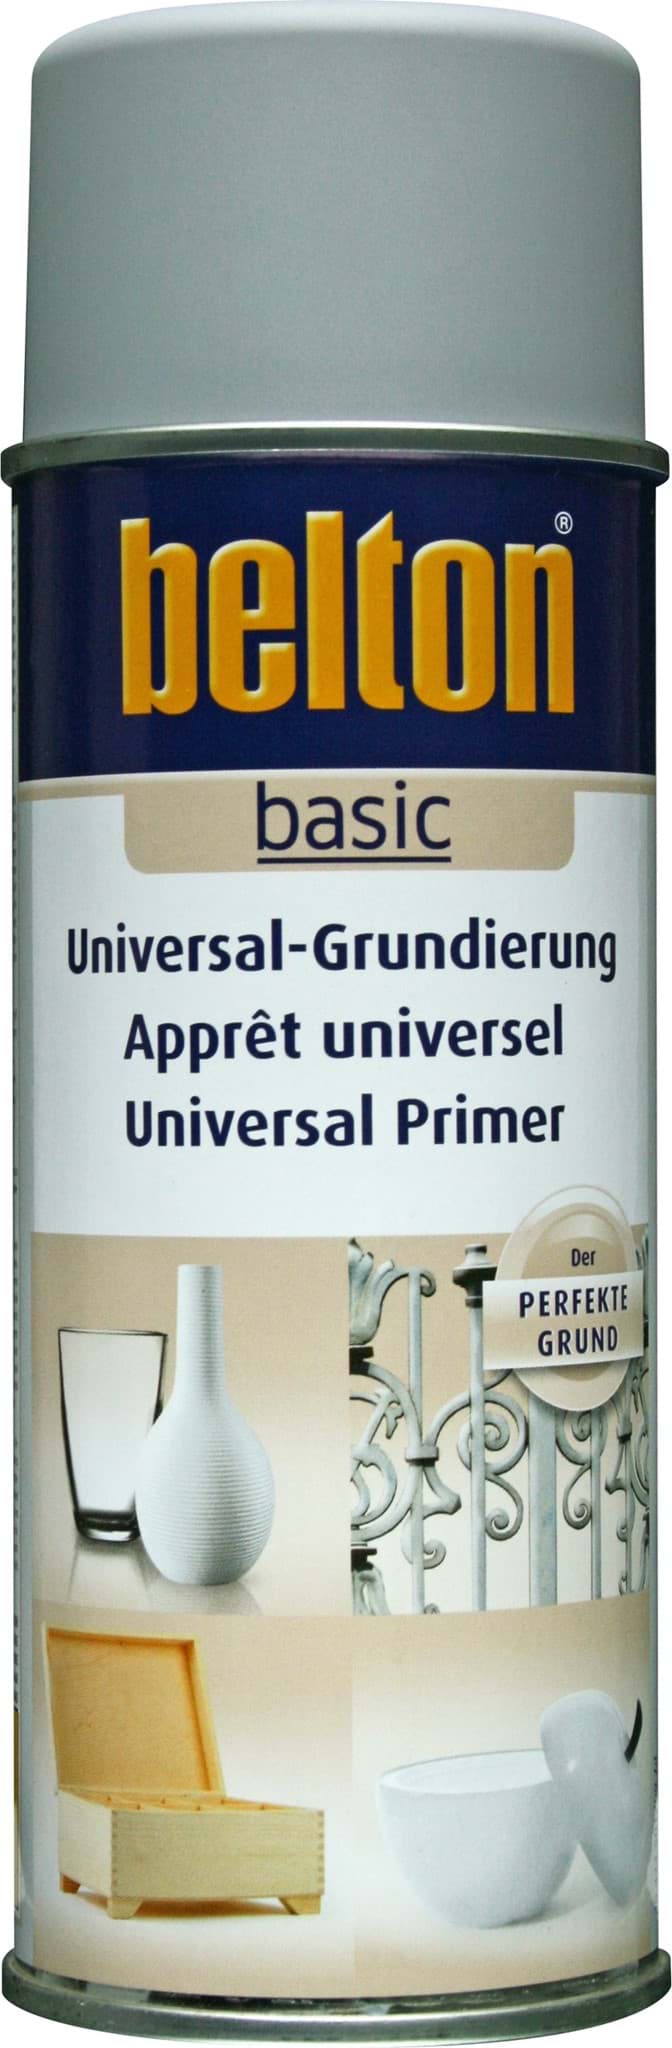 Picture of Belton basic Universal Grundierung grau